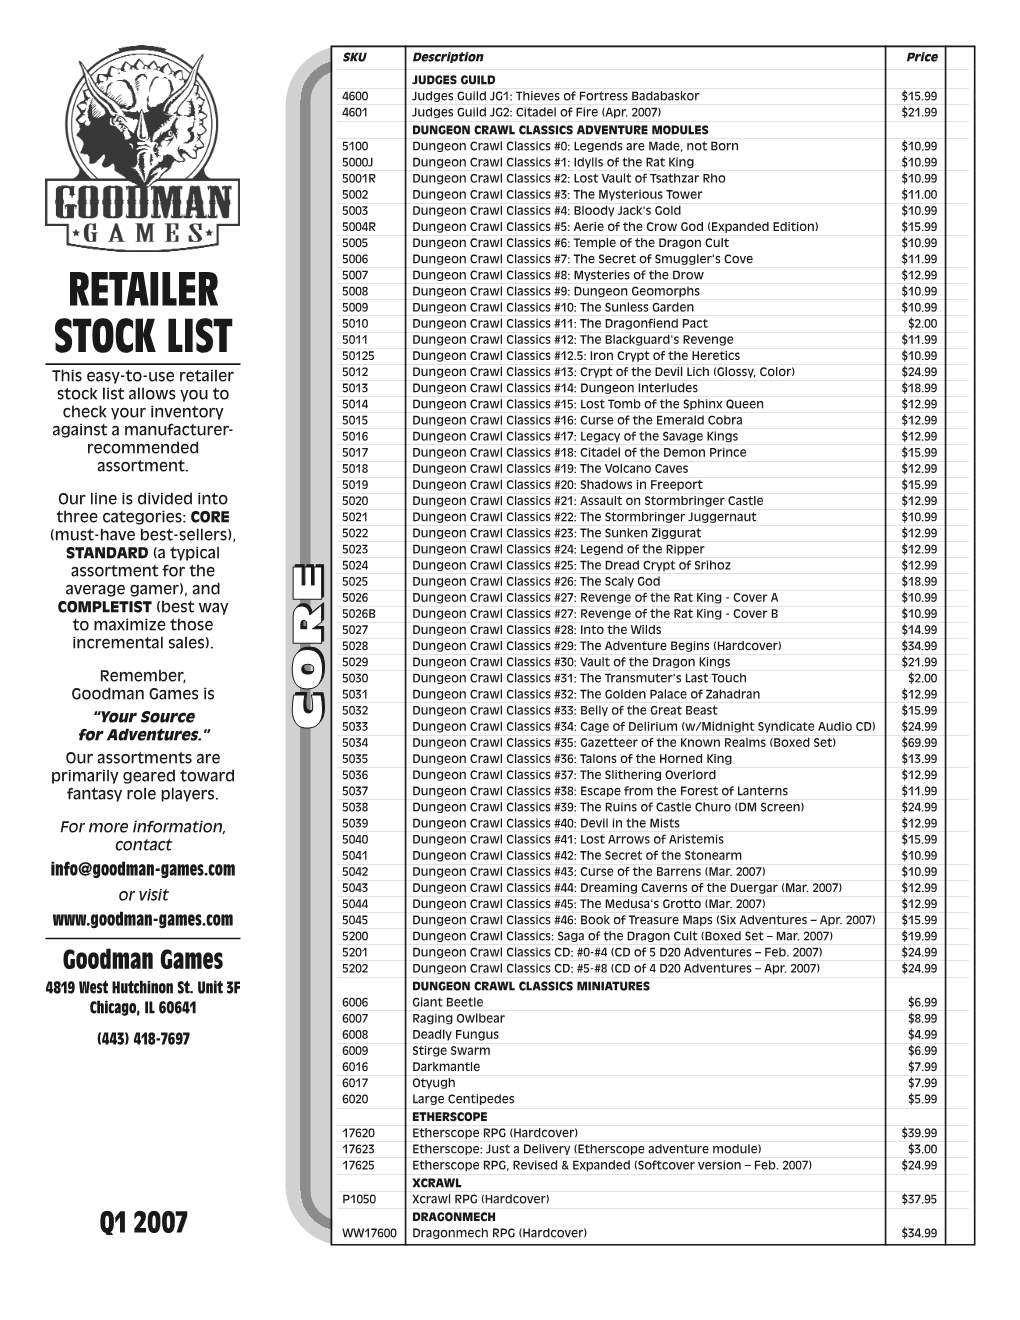 Goodman Games Retailer Stock List